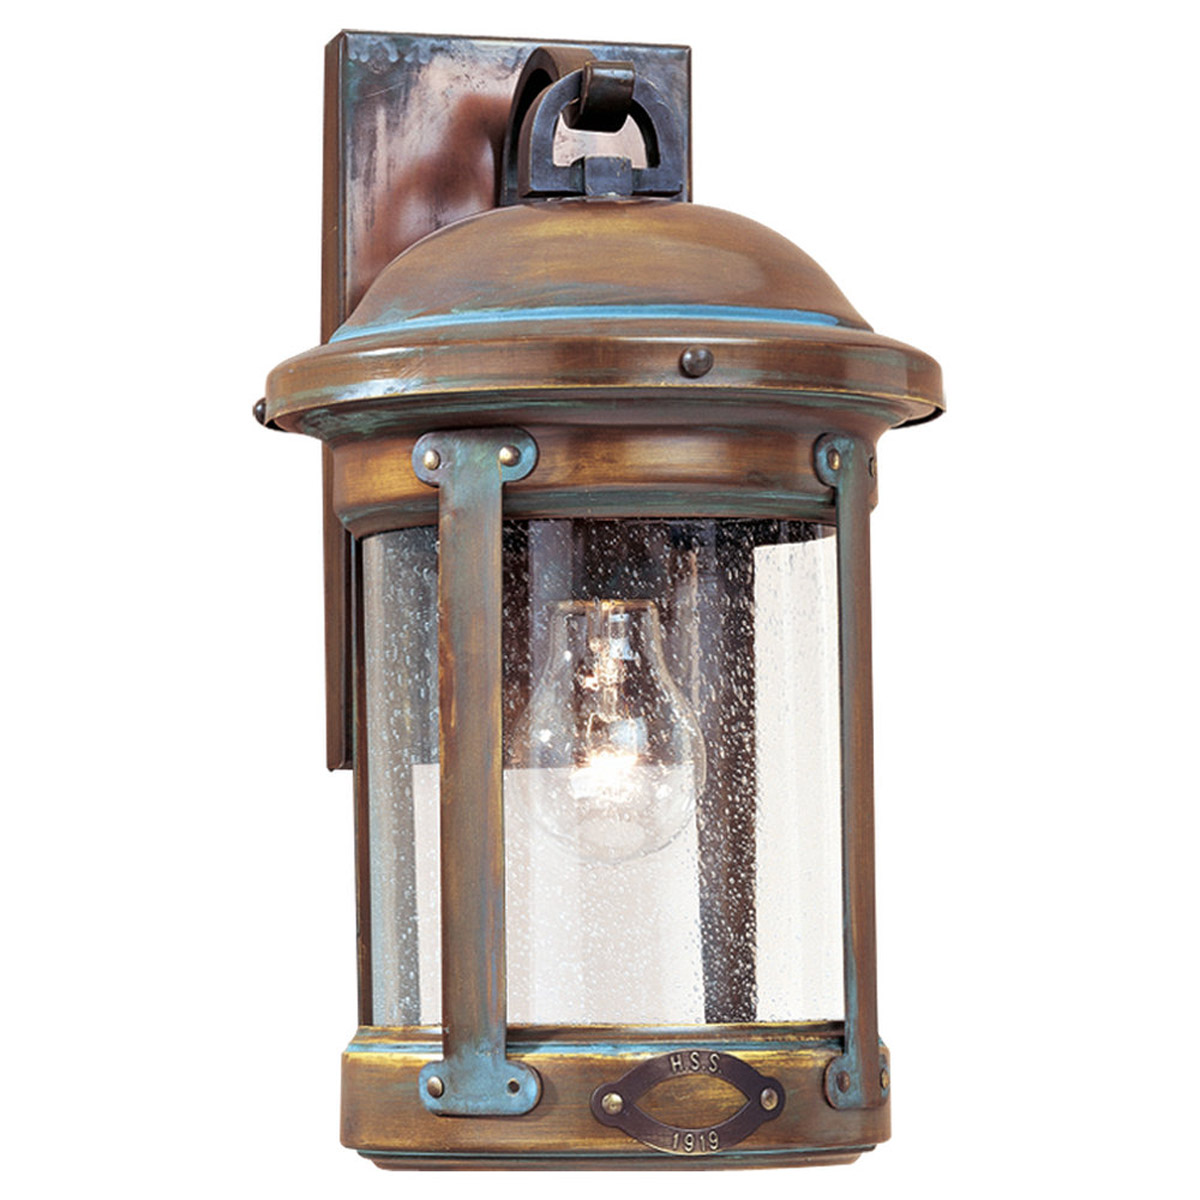 Sea Gull Lighting HSS CO-OP 1 Light Outdoor Wall Lantern in Aged Brass 8440-28